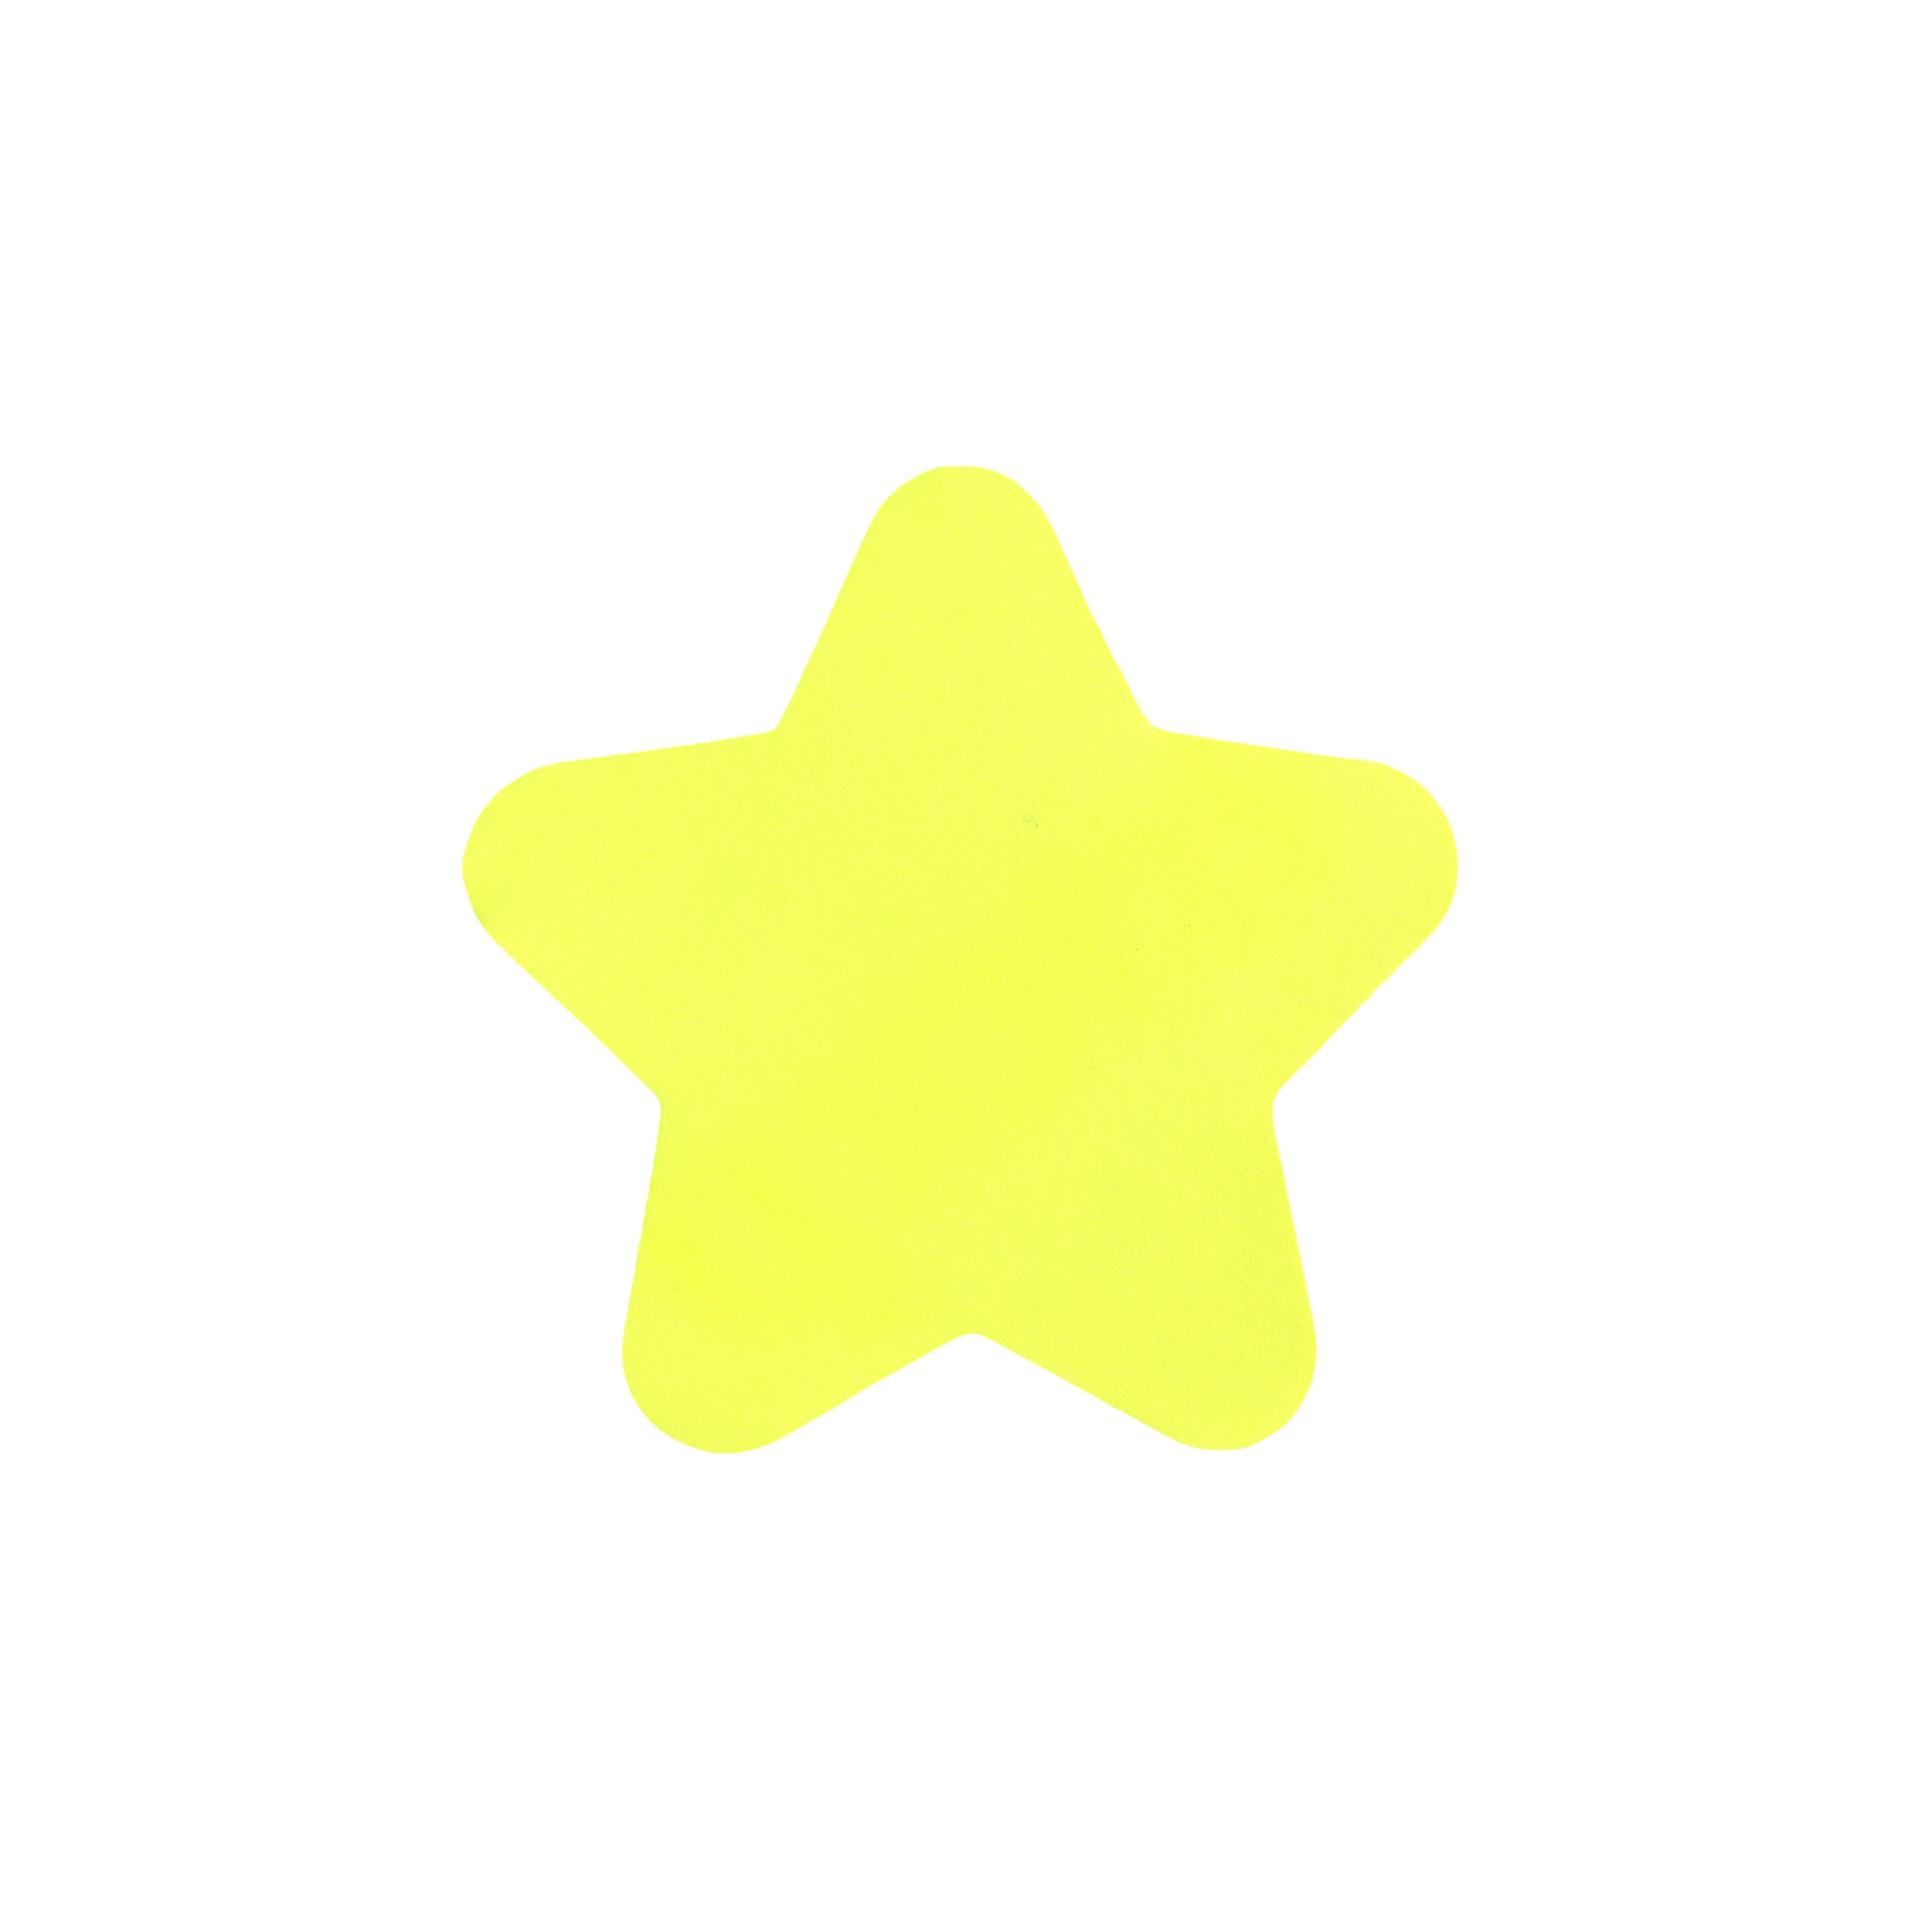 Stick'n Самозалепващи се листчета Звезда, неонови, жълти, 50 листа